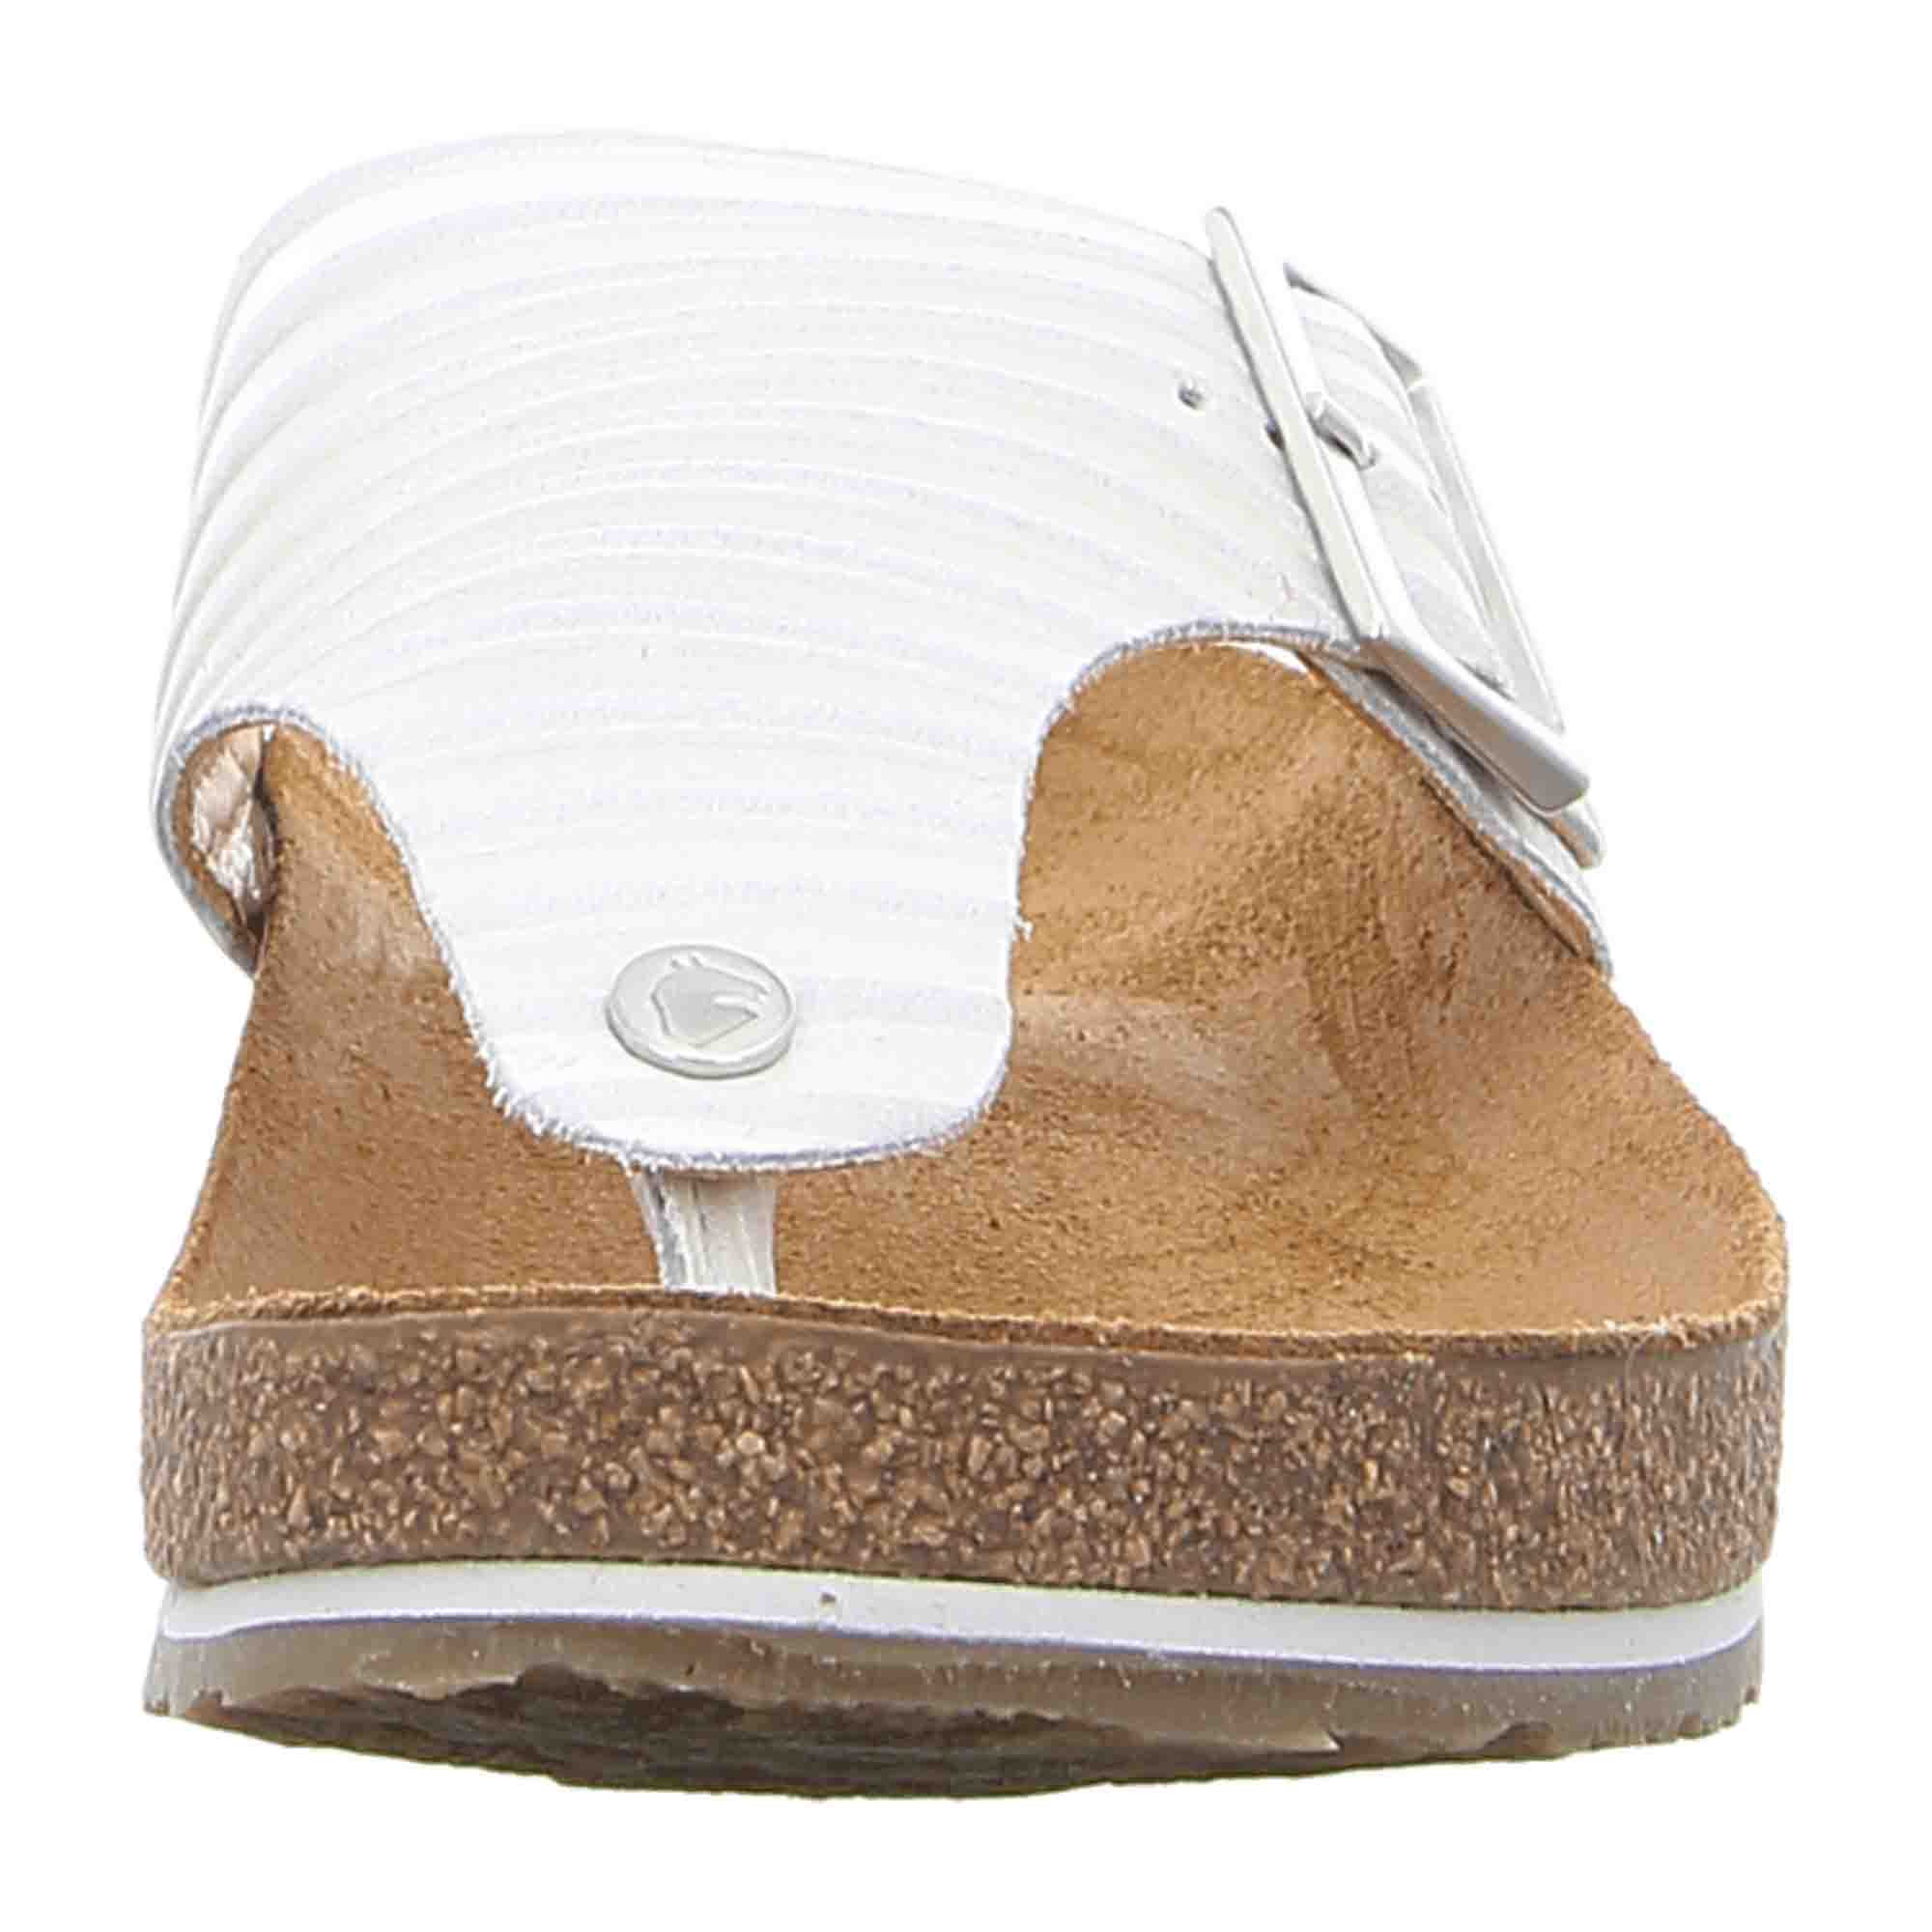 Haflinger Bio Conny Women's White Sandals - Eco-Friendly, Stylish & Comfortable